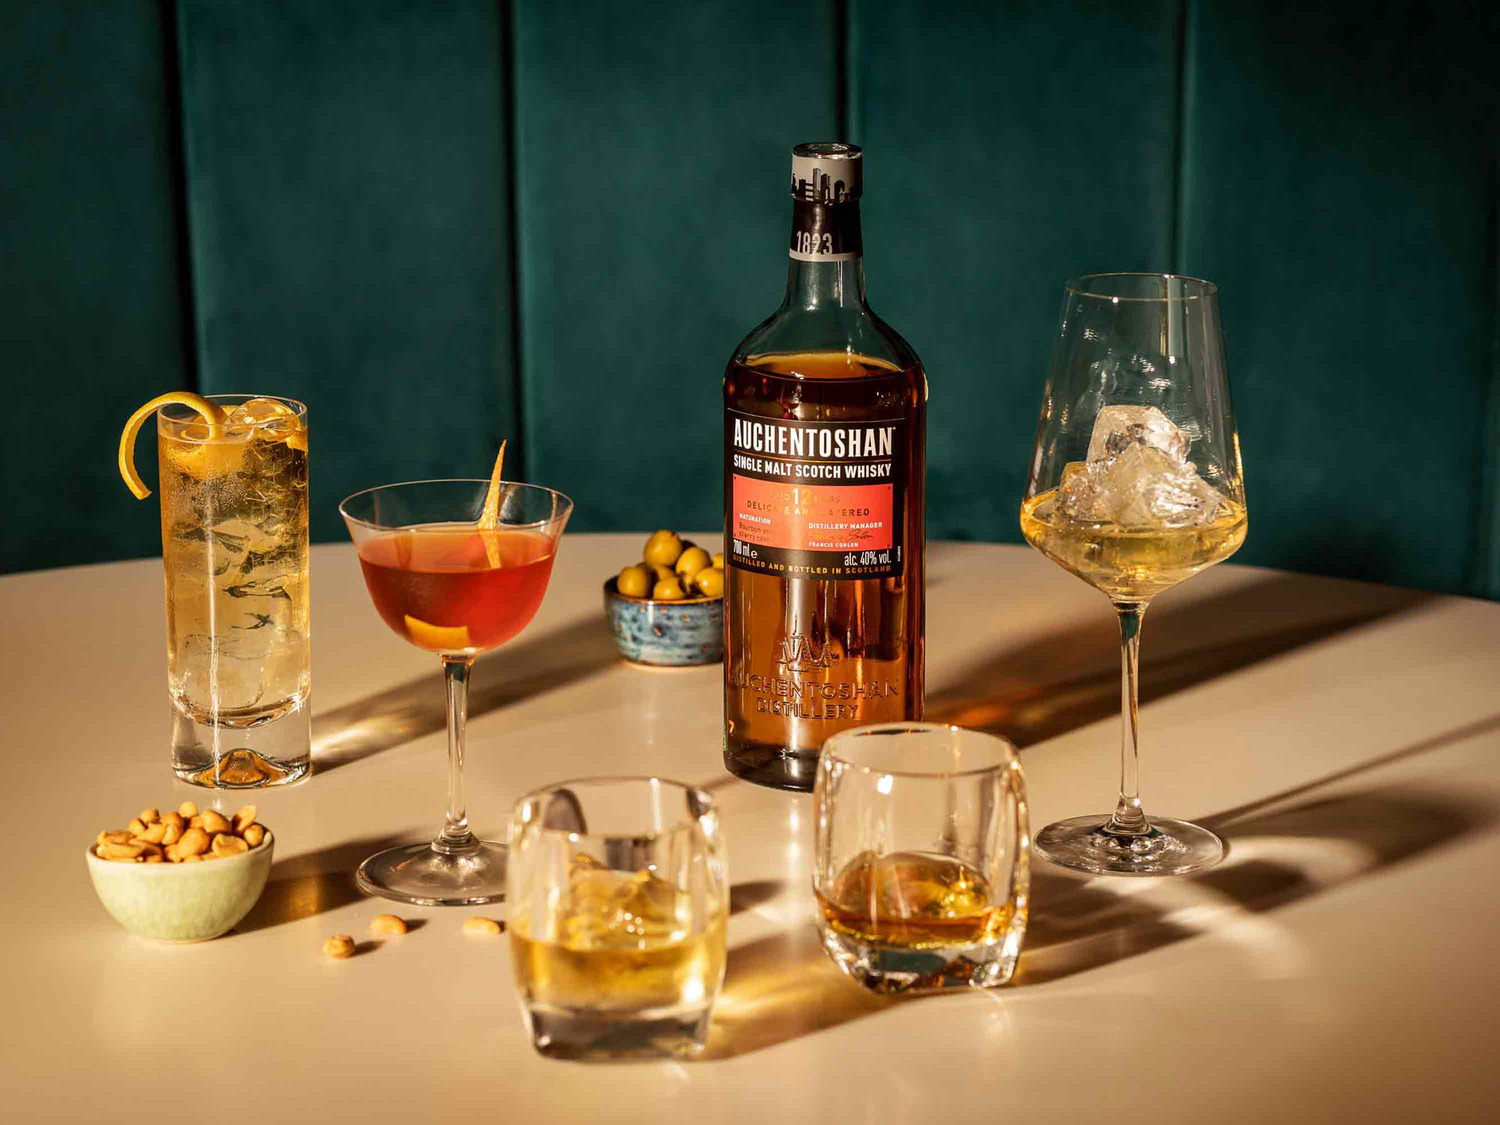 Auchentoshan Lowland Single Malt Scotch Whisky 12 Jahr…